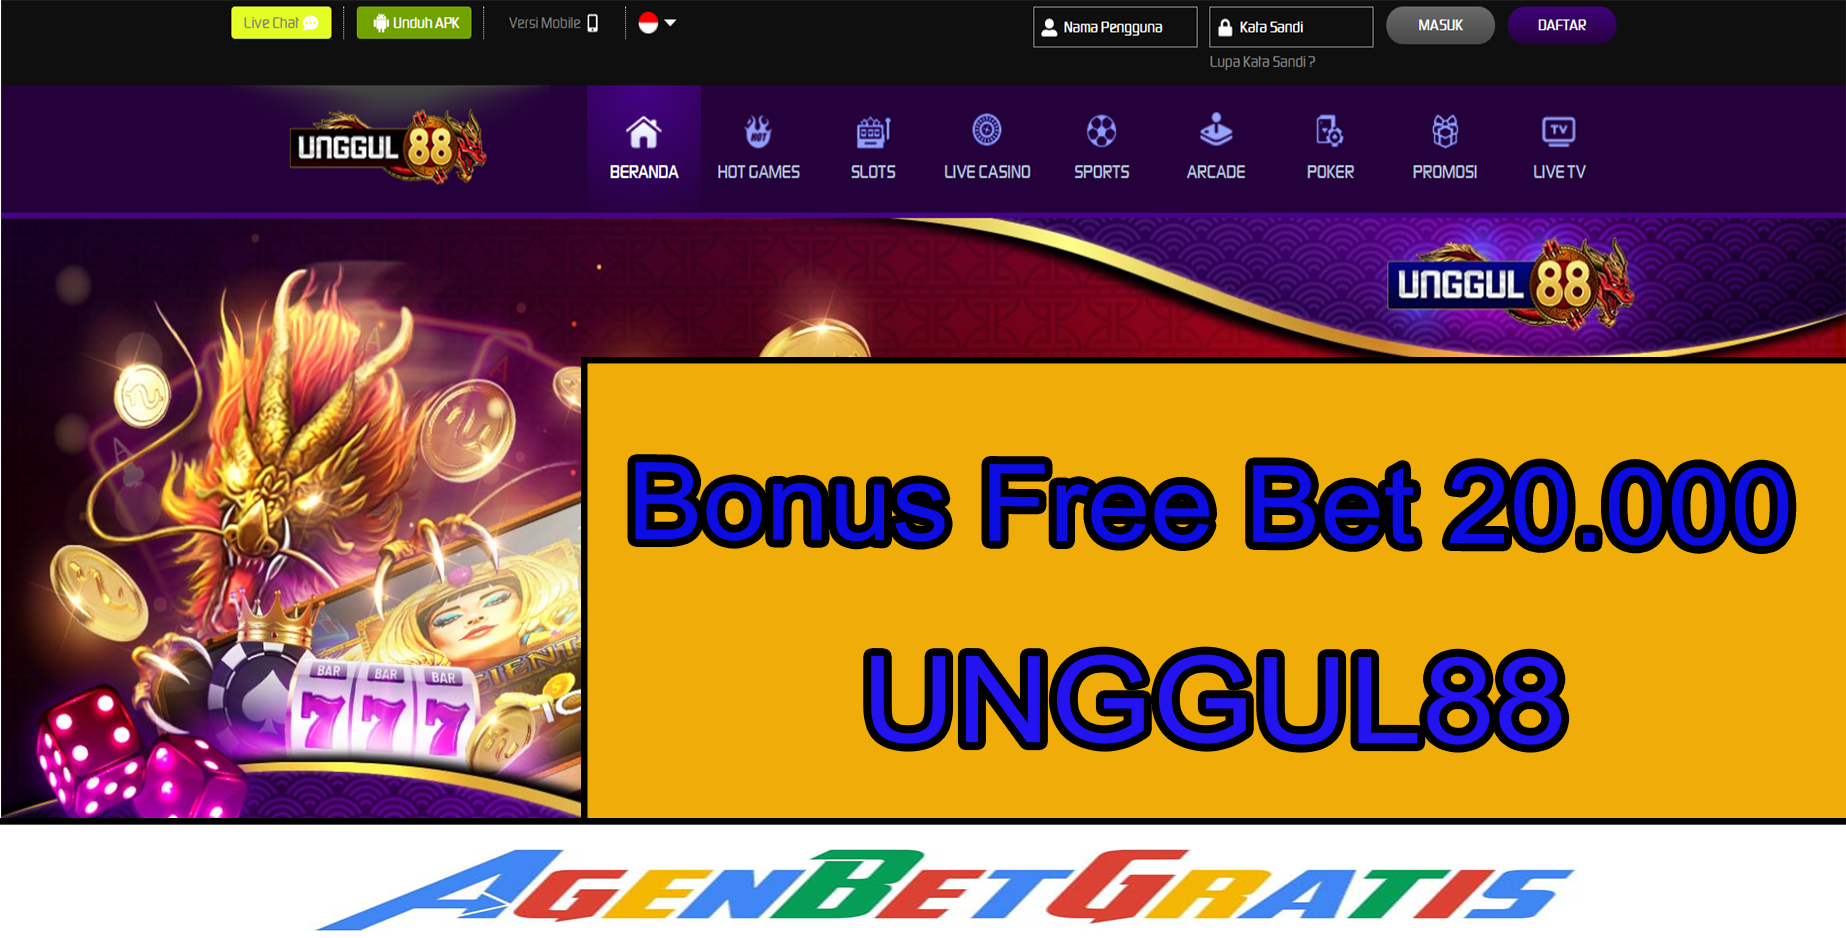 UNGGUL88 - Bonus Free Bet 20.000